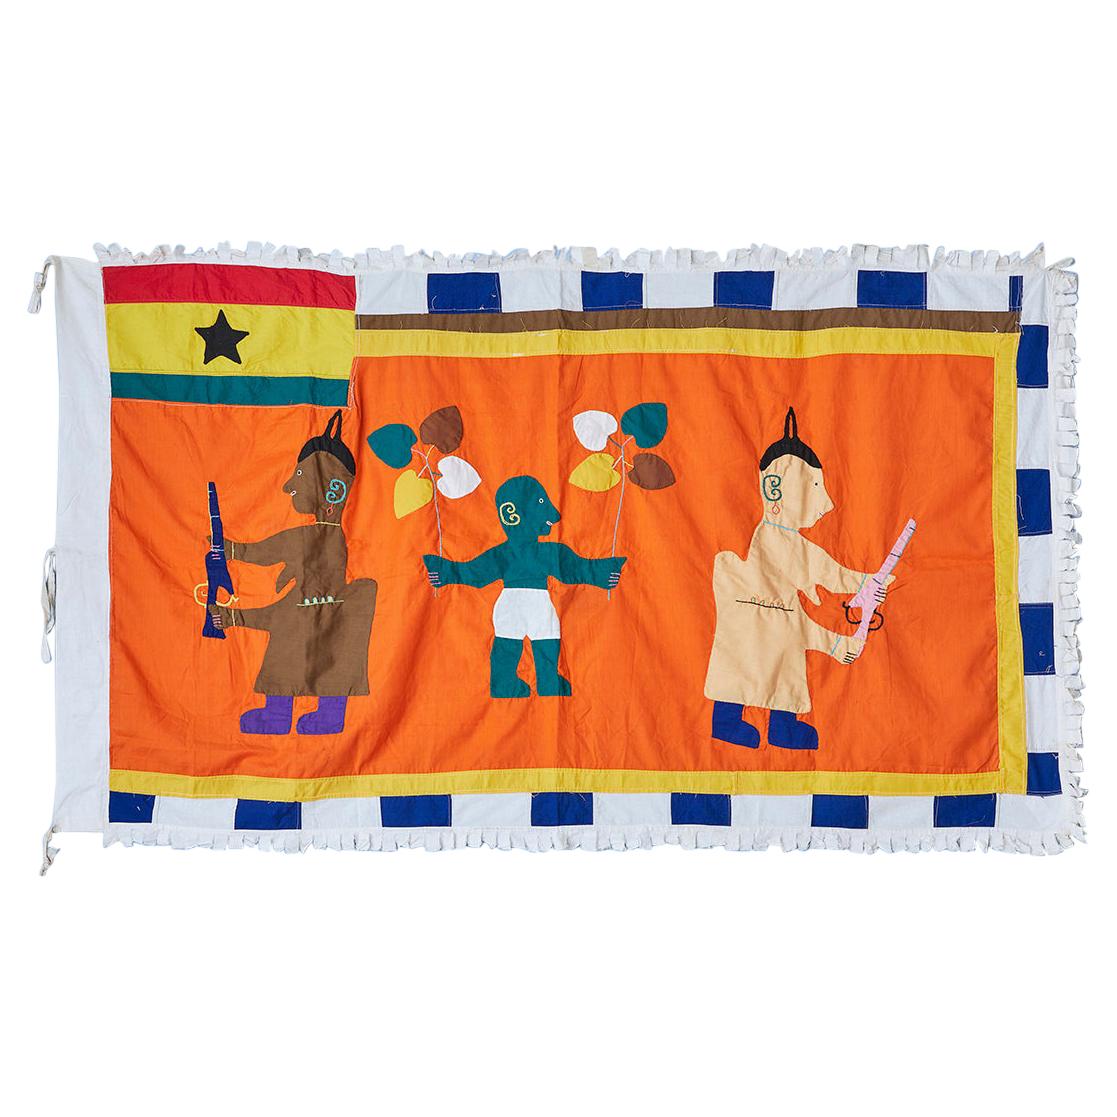 Vintage Asafo Flag in Orange Appliqué Patterns by the Fante People, Ghana 1970's